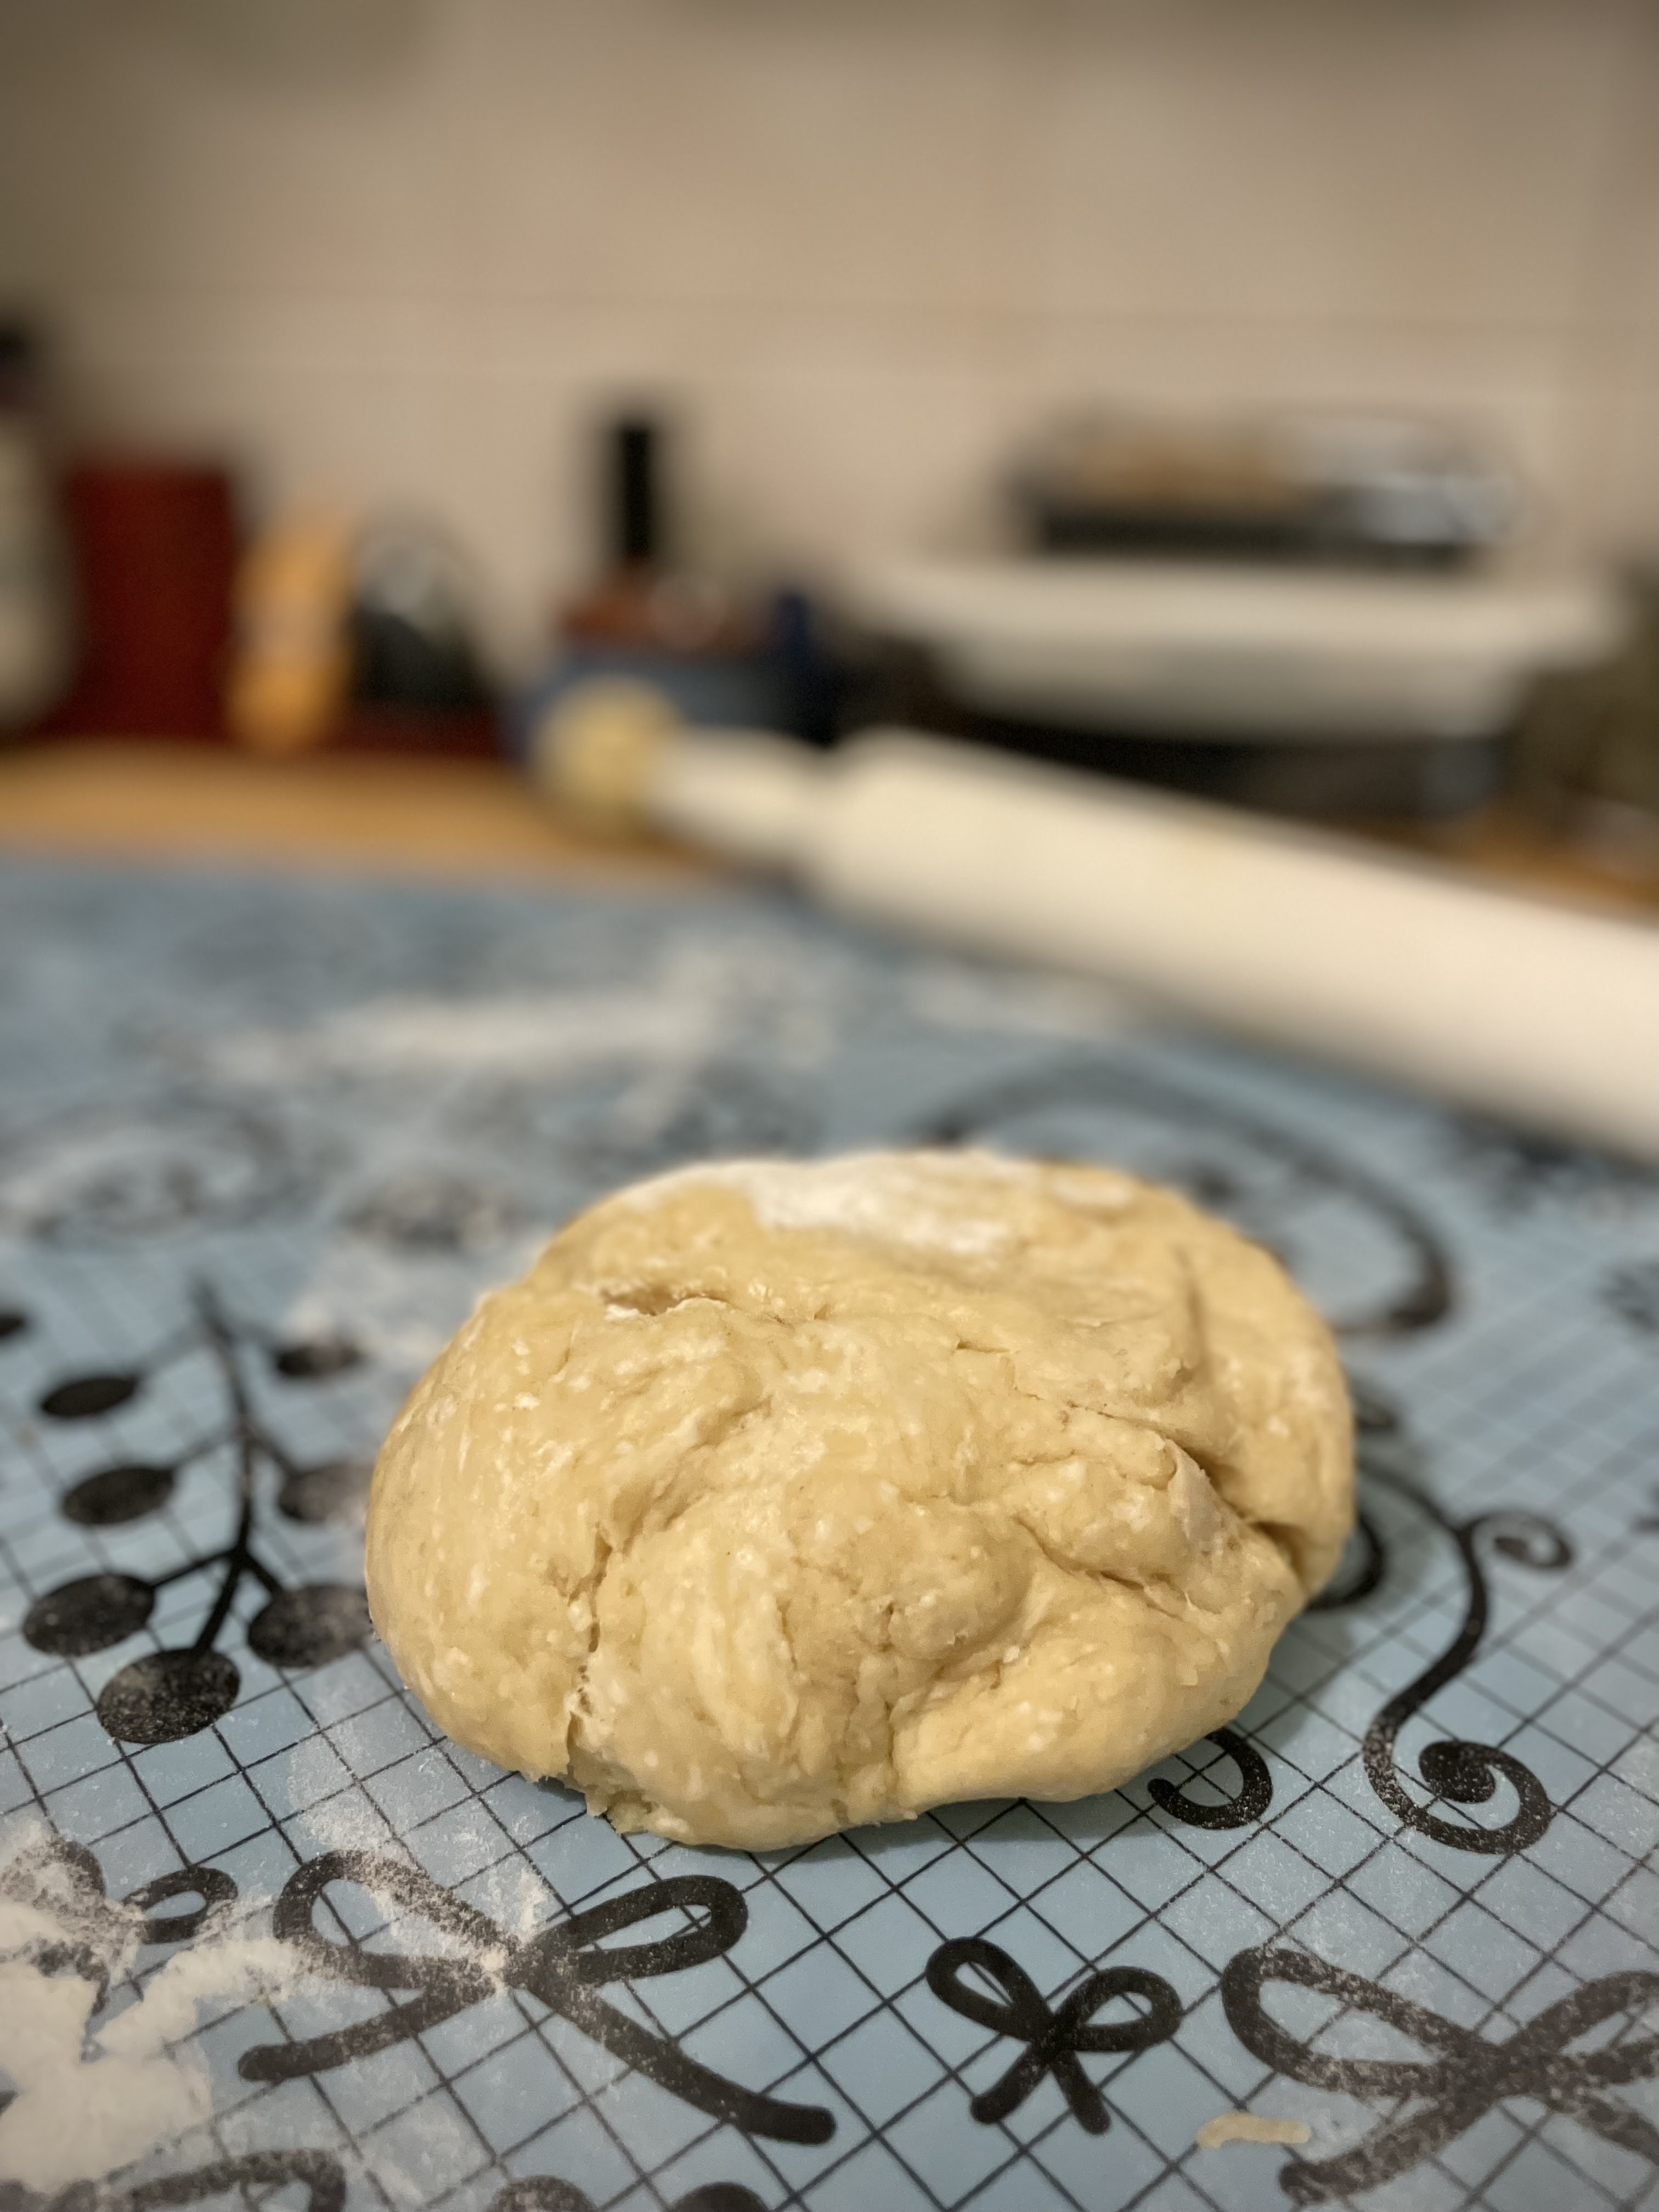 The saratele dough